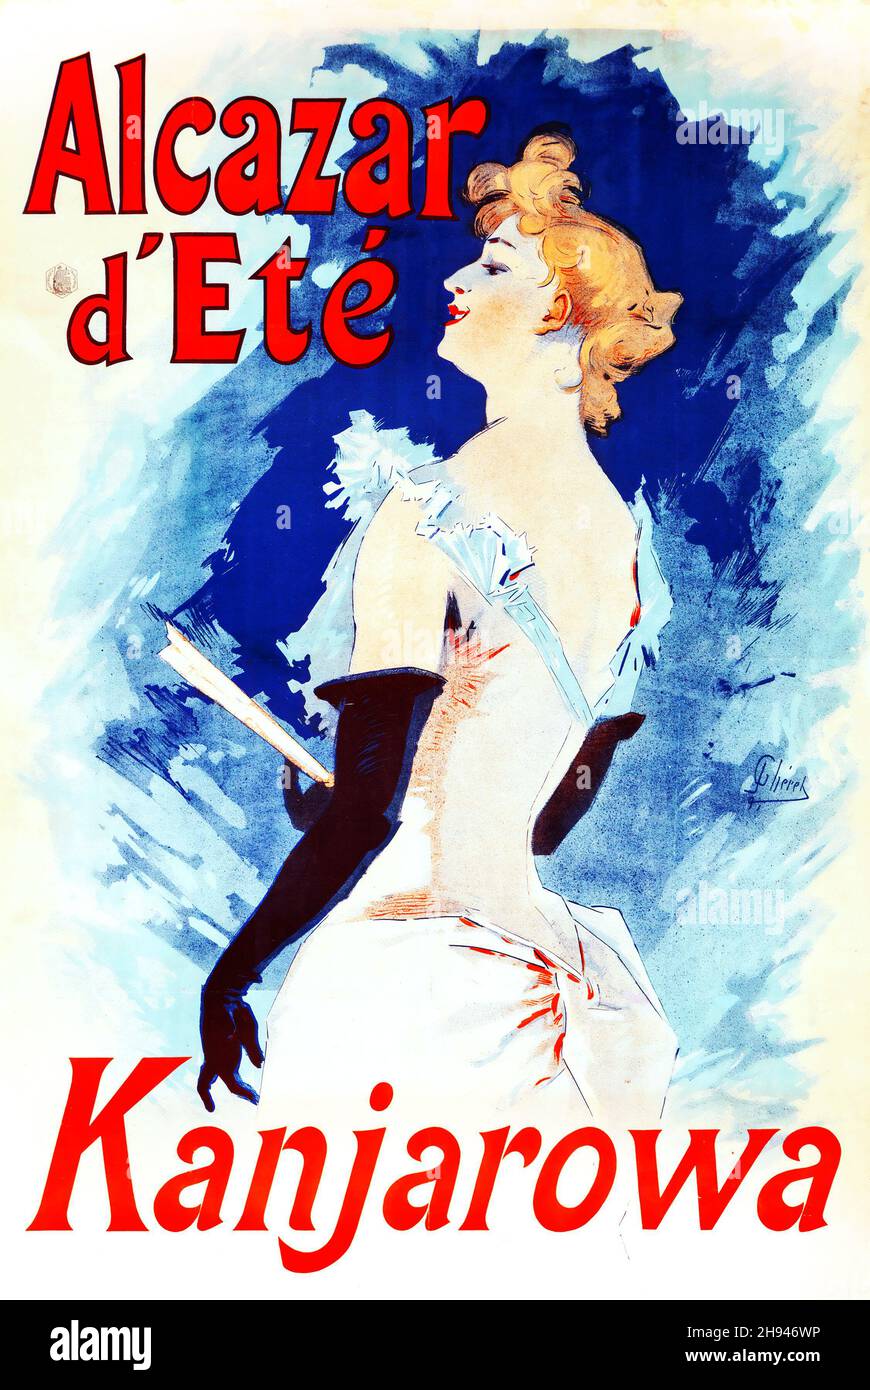 Alcazar d'Ete - Kanjarowa, 1891 - Poster art by Jules Chéret (1836-1932). French. Stock Photo